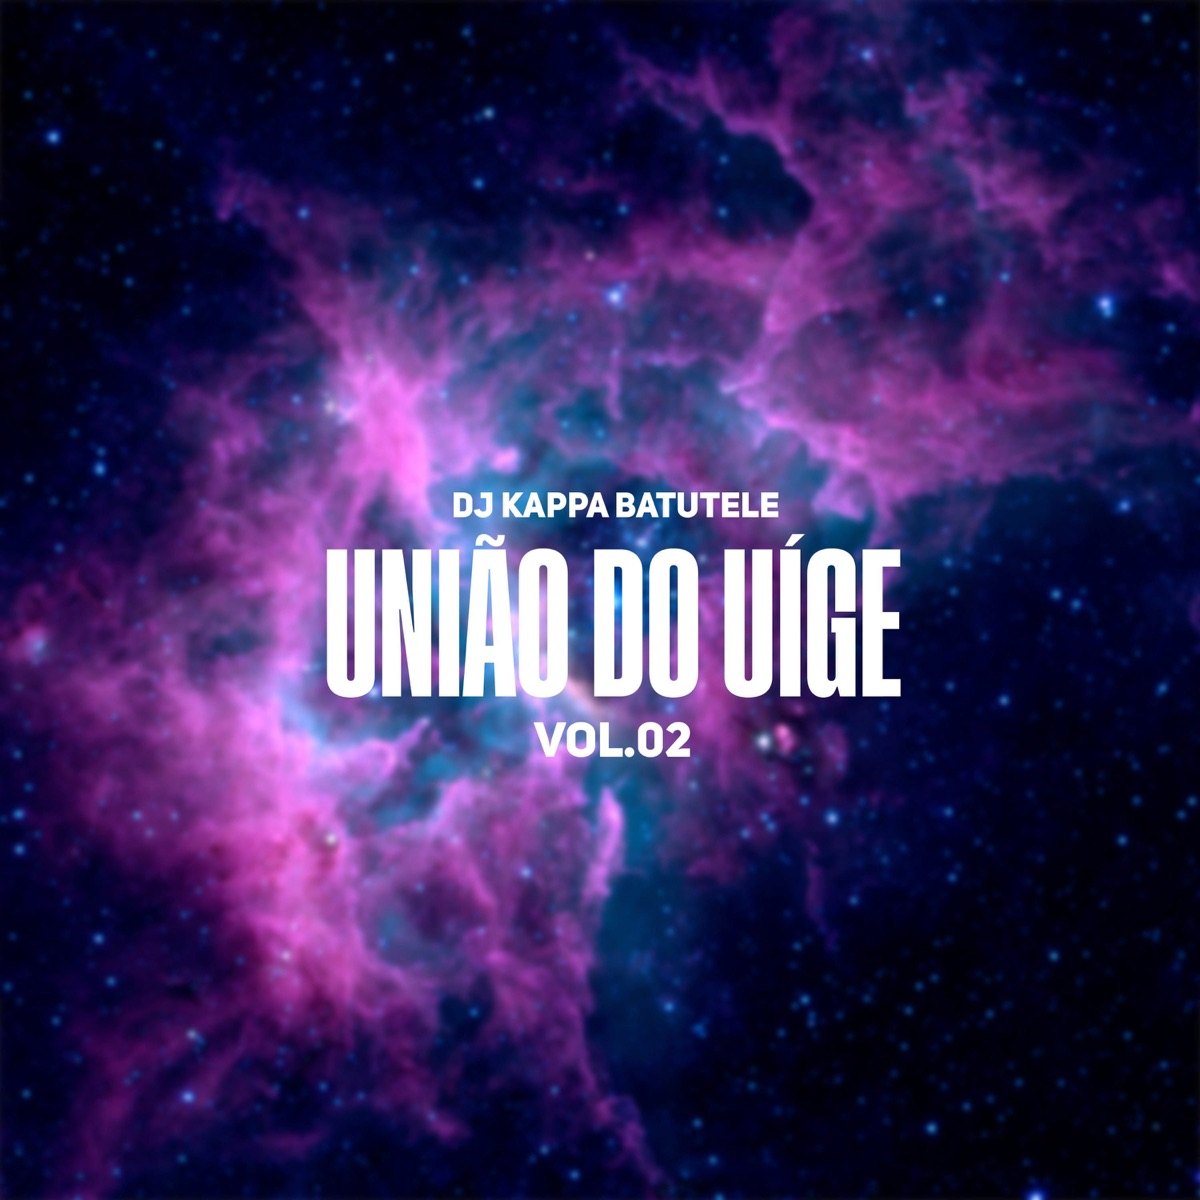 União do Uíge Vol.02 - Album by Dj Kappa Batutele - Apple Music